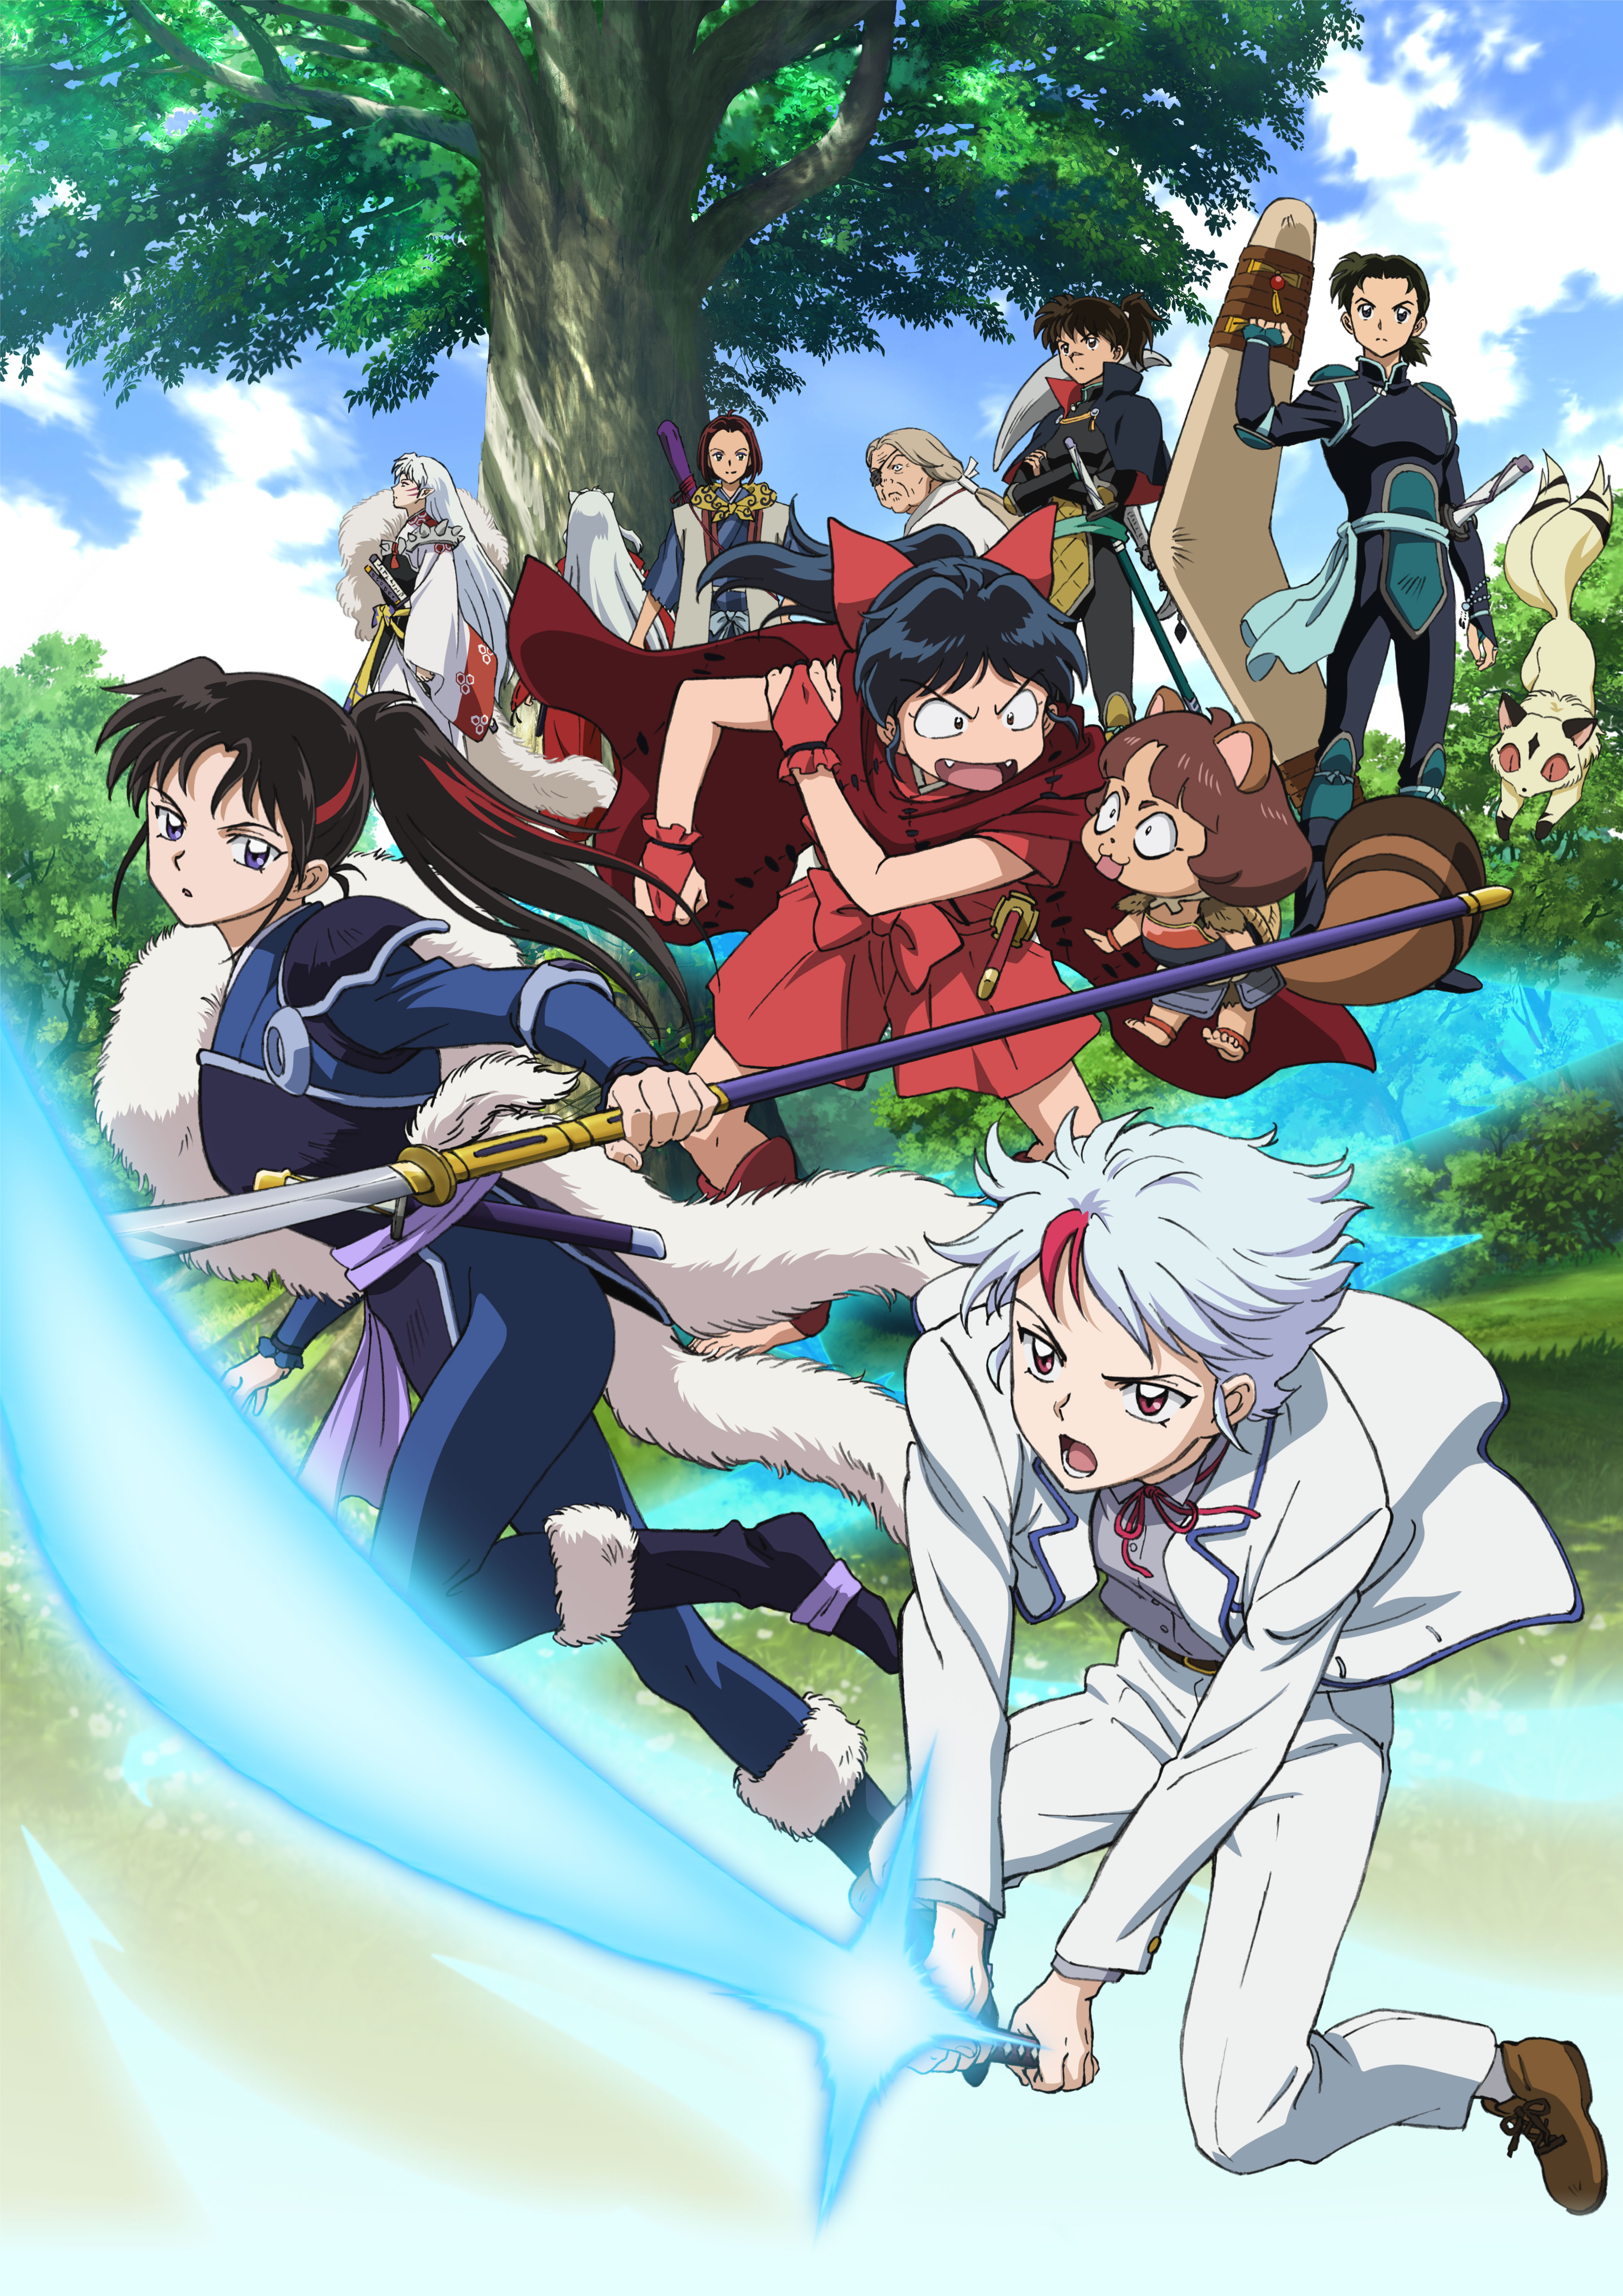 TVアニメ『半妖の夜叉姫』Blu-ray & DVD BOXのVol.1&2が発売決定 